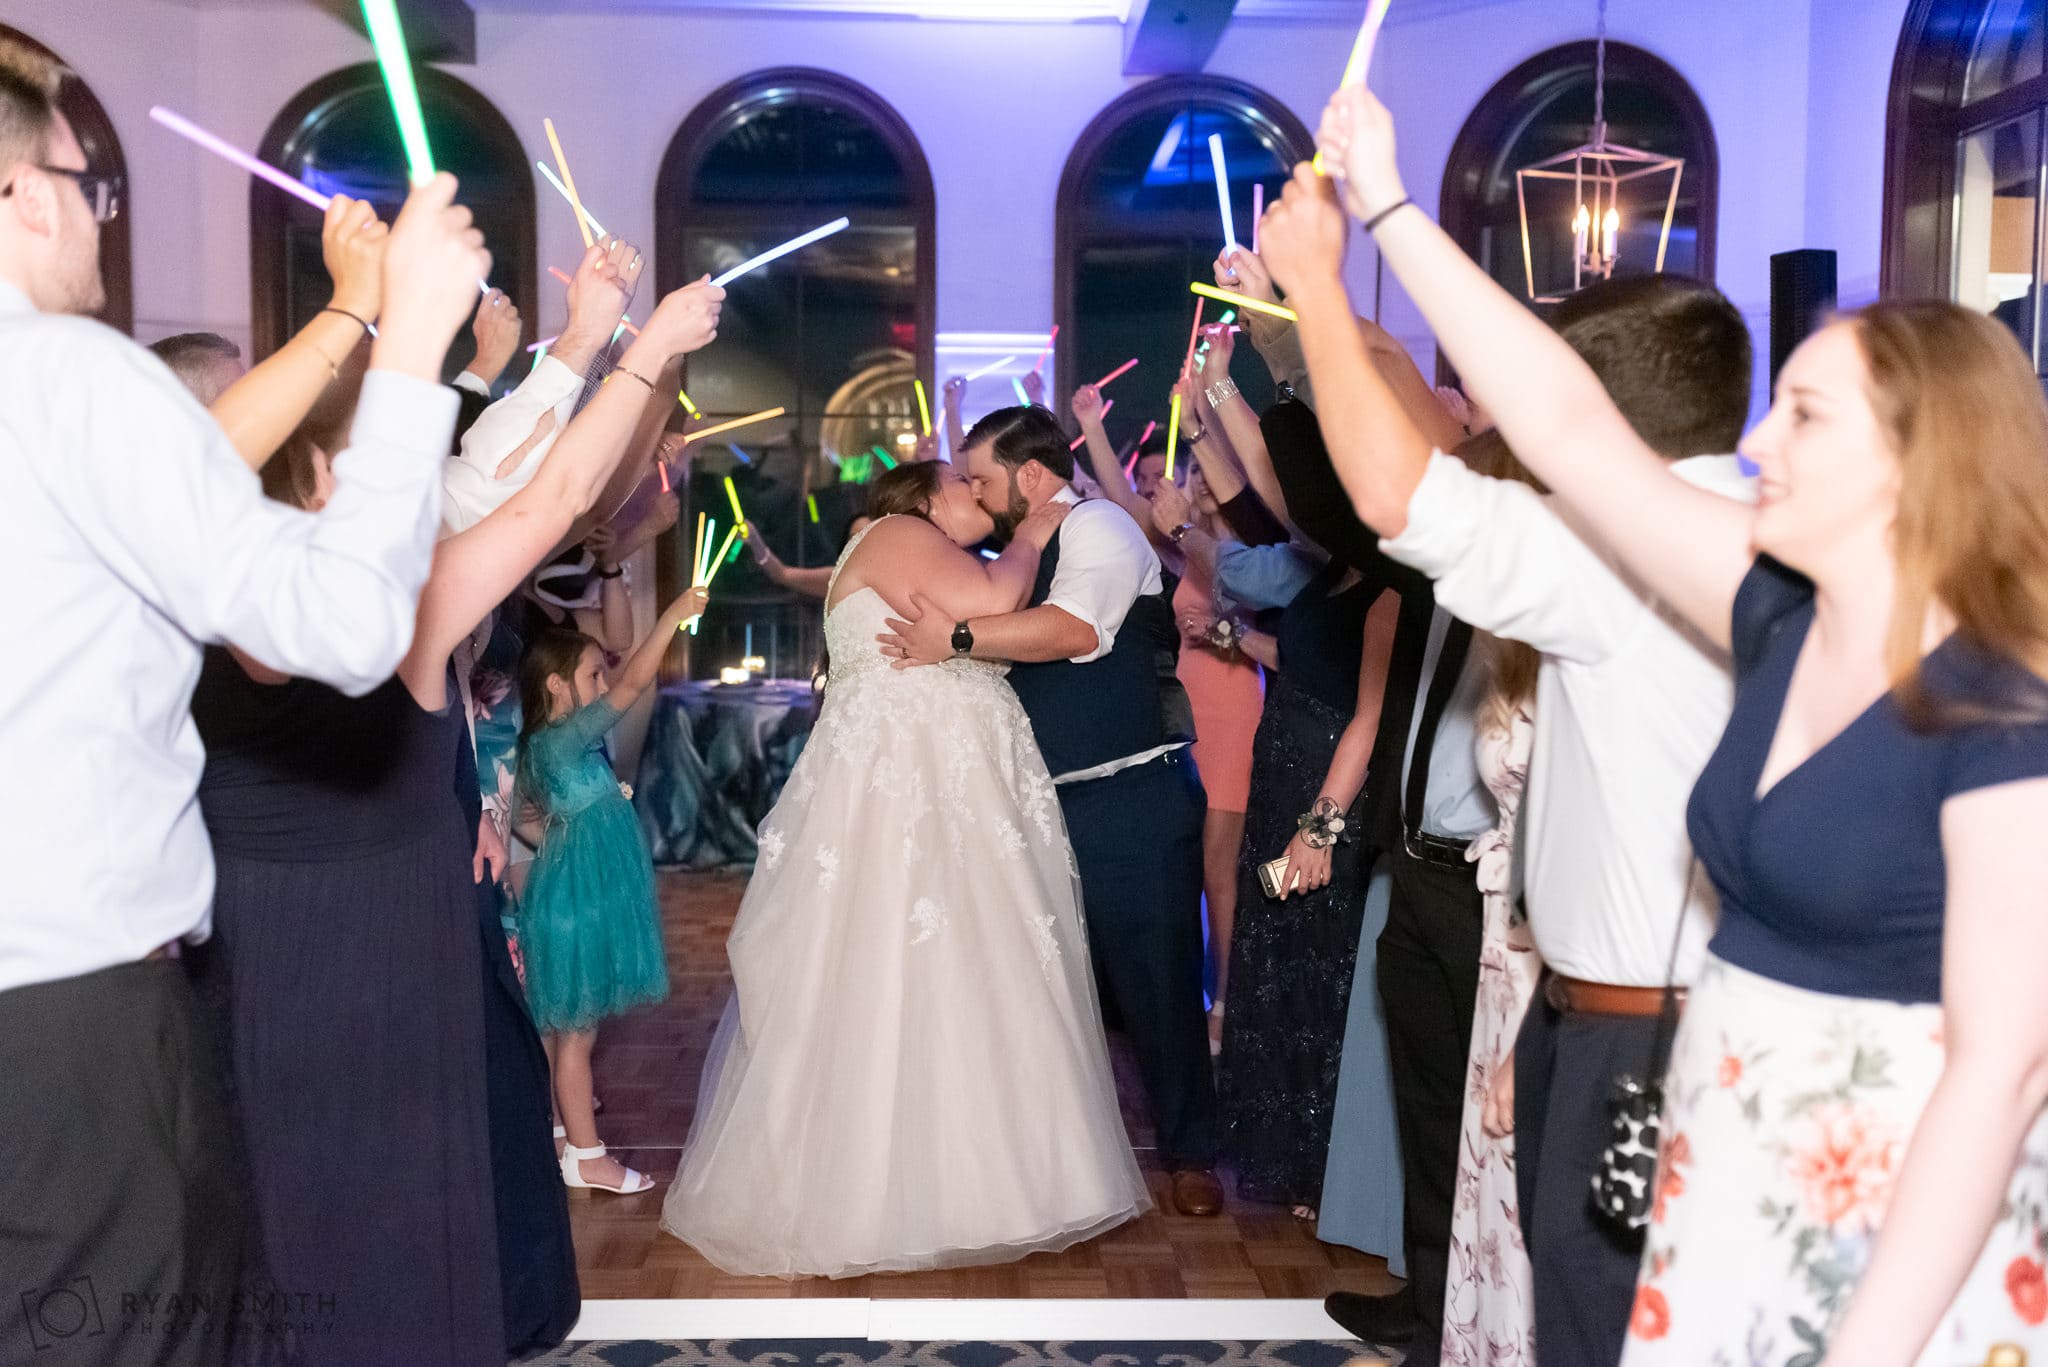 Glow stick exit with bride and groom Grande Dunes Ocean Club